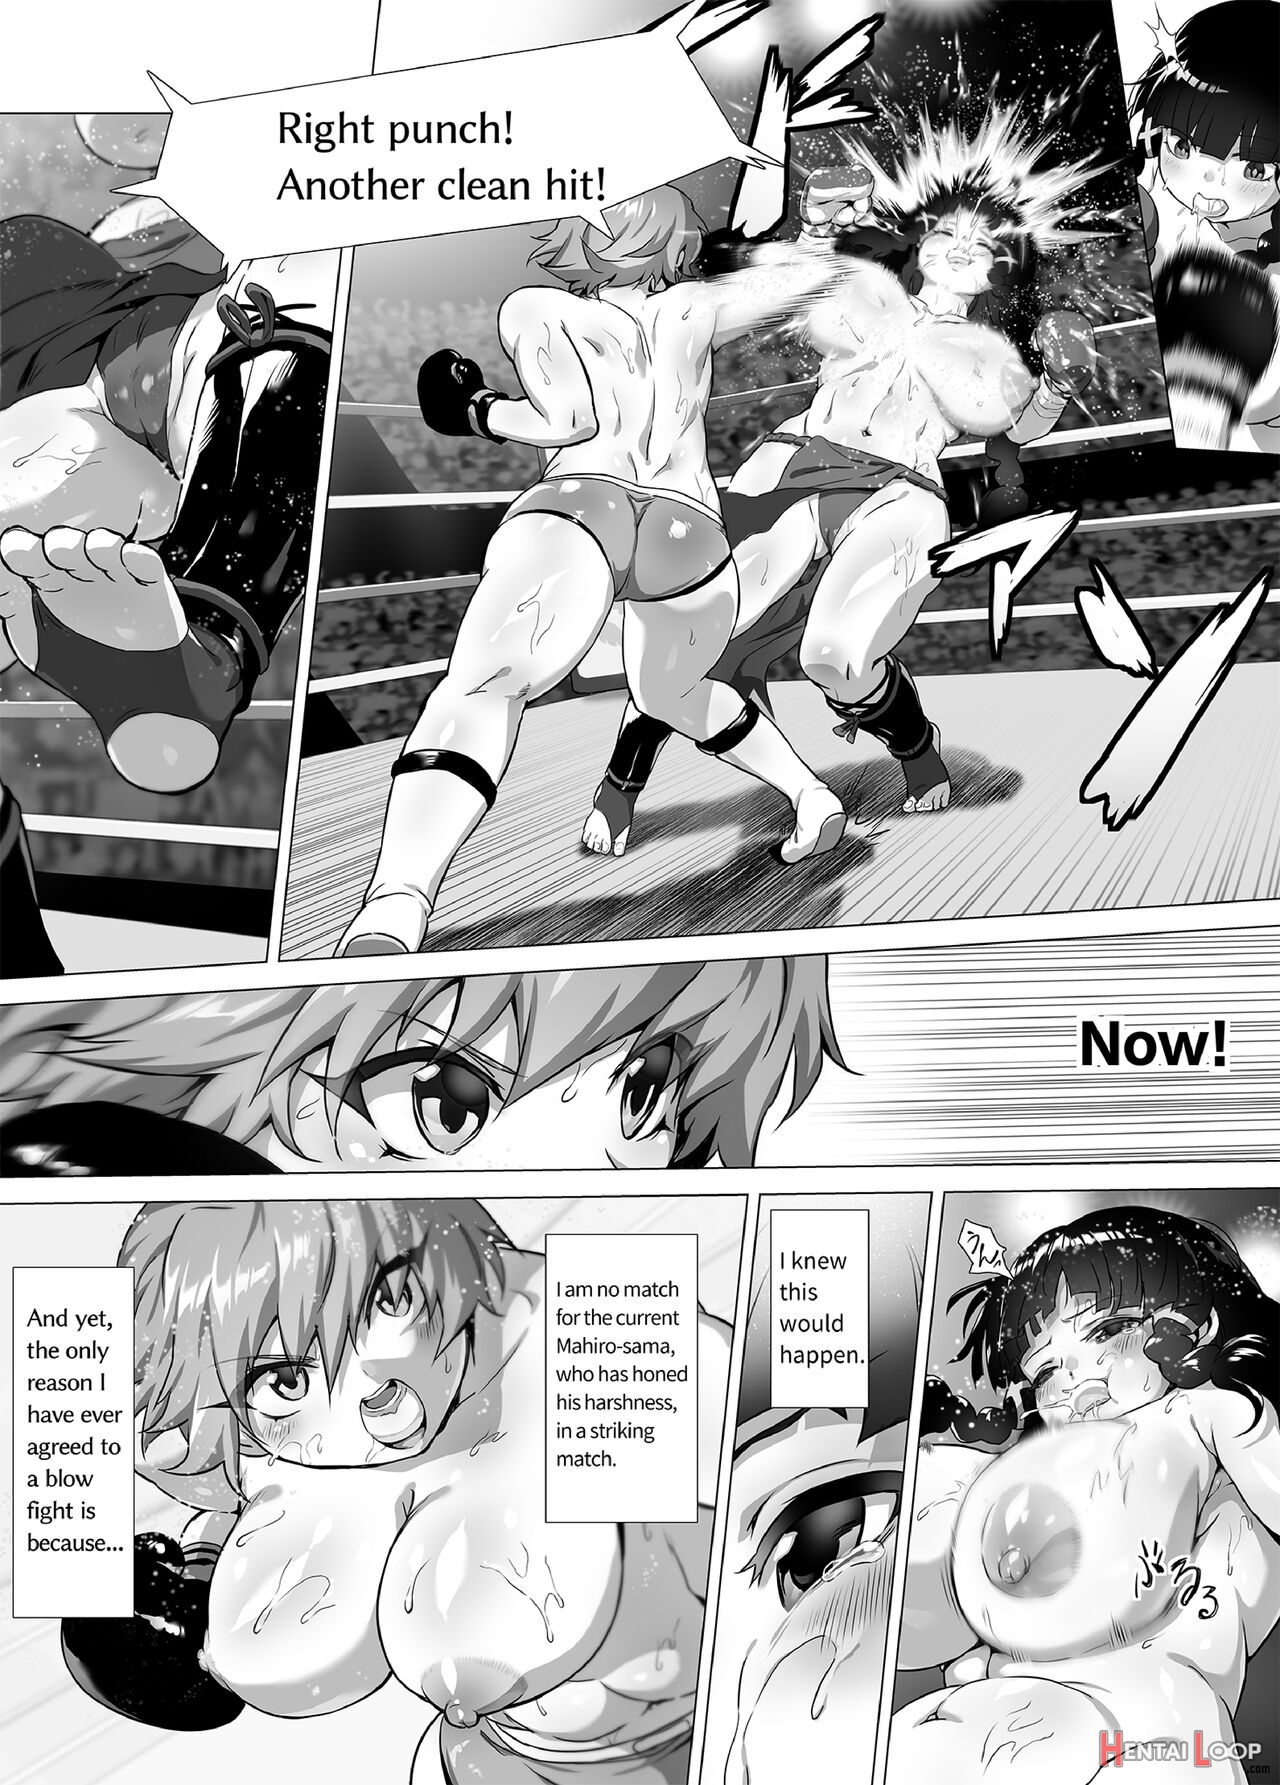 Mahiro Standup! Manga Ver. ~an New Foe Appears! Meet The Lovely Yuzuki~ page 24